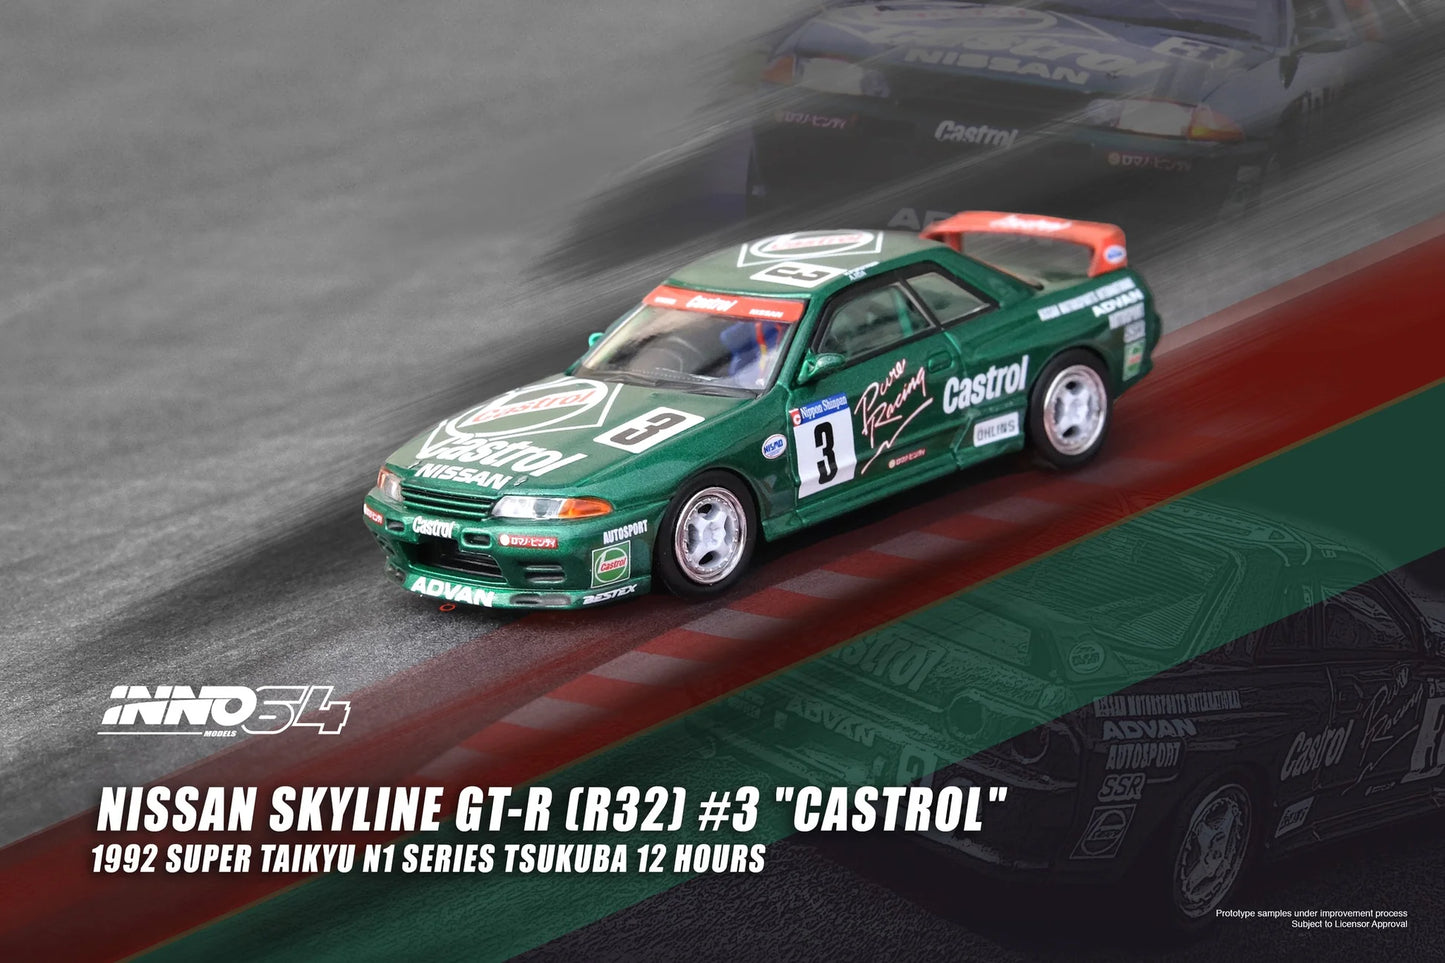 Inno Models Inno64 Nissan Skyline GT-R (R32) #3 "Castrol" Super Taikyu N1 Series Tsukuba 12 Hours 1992